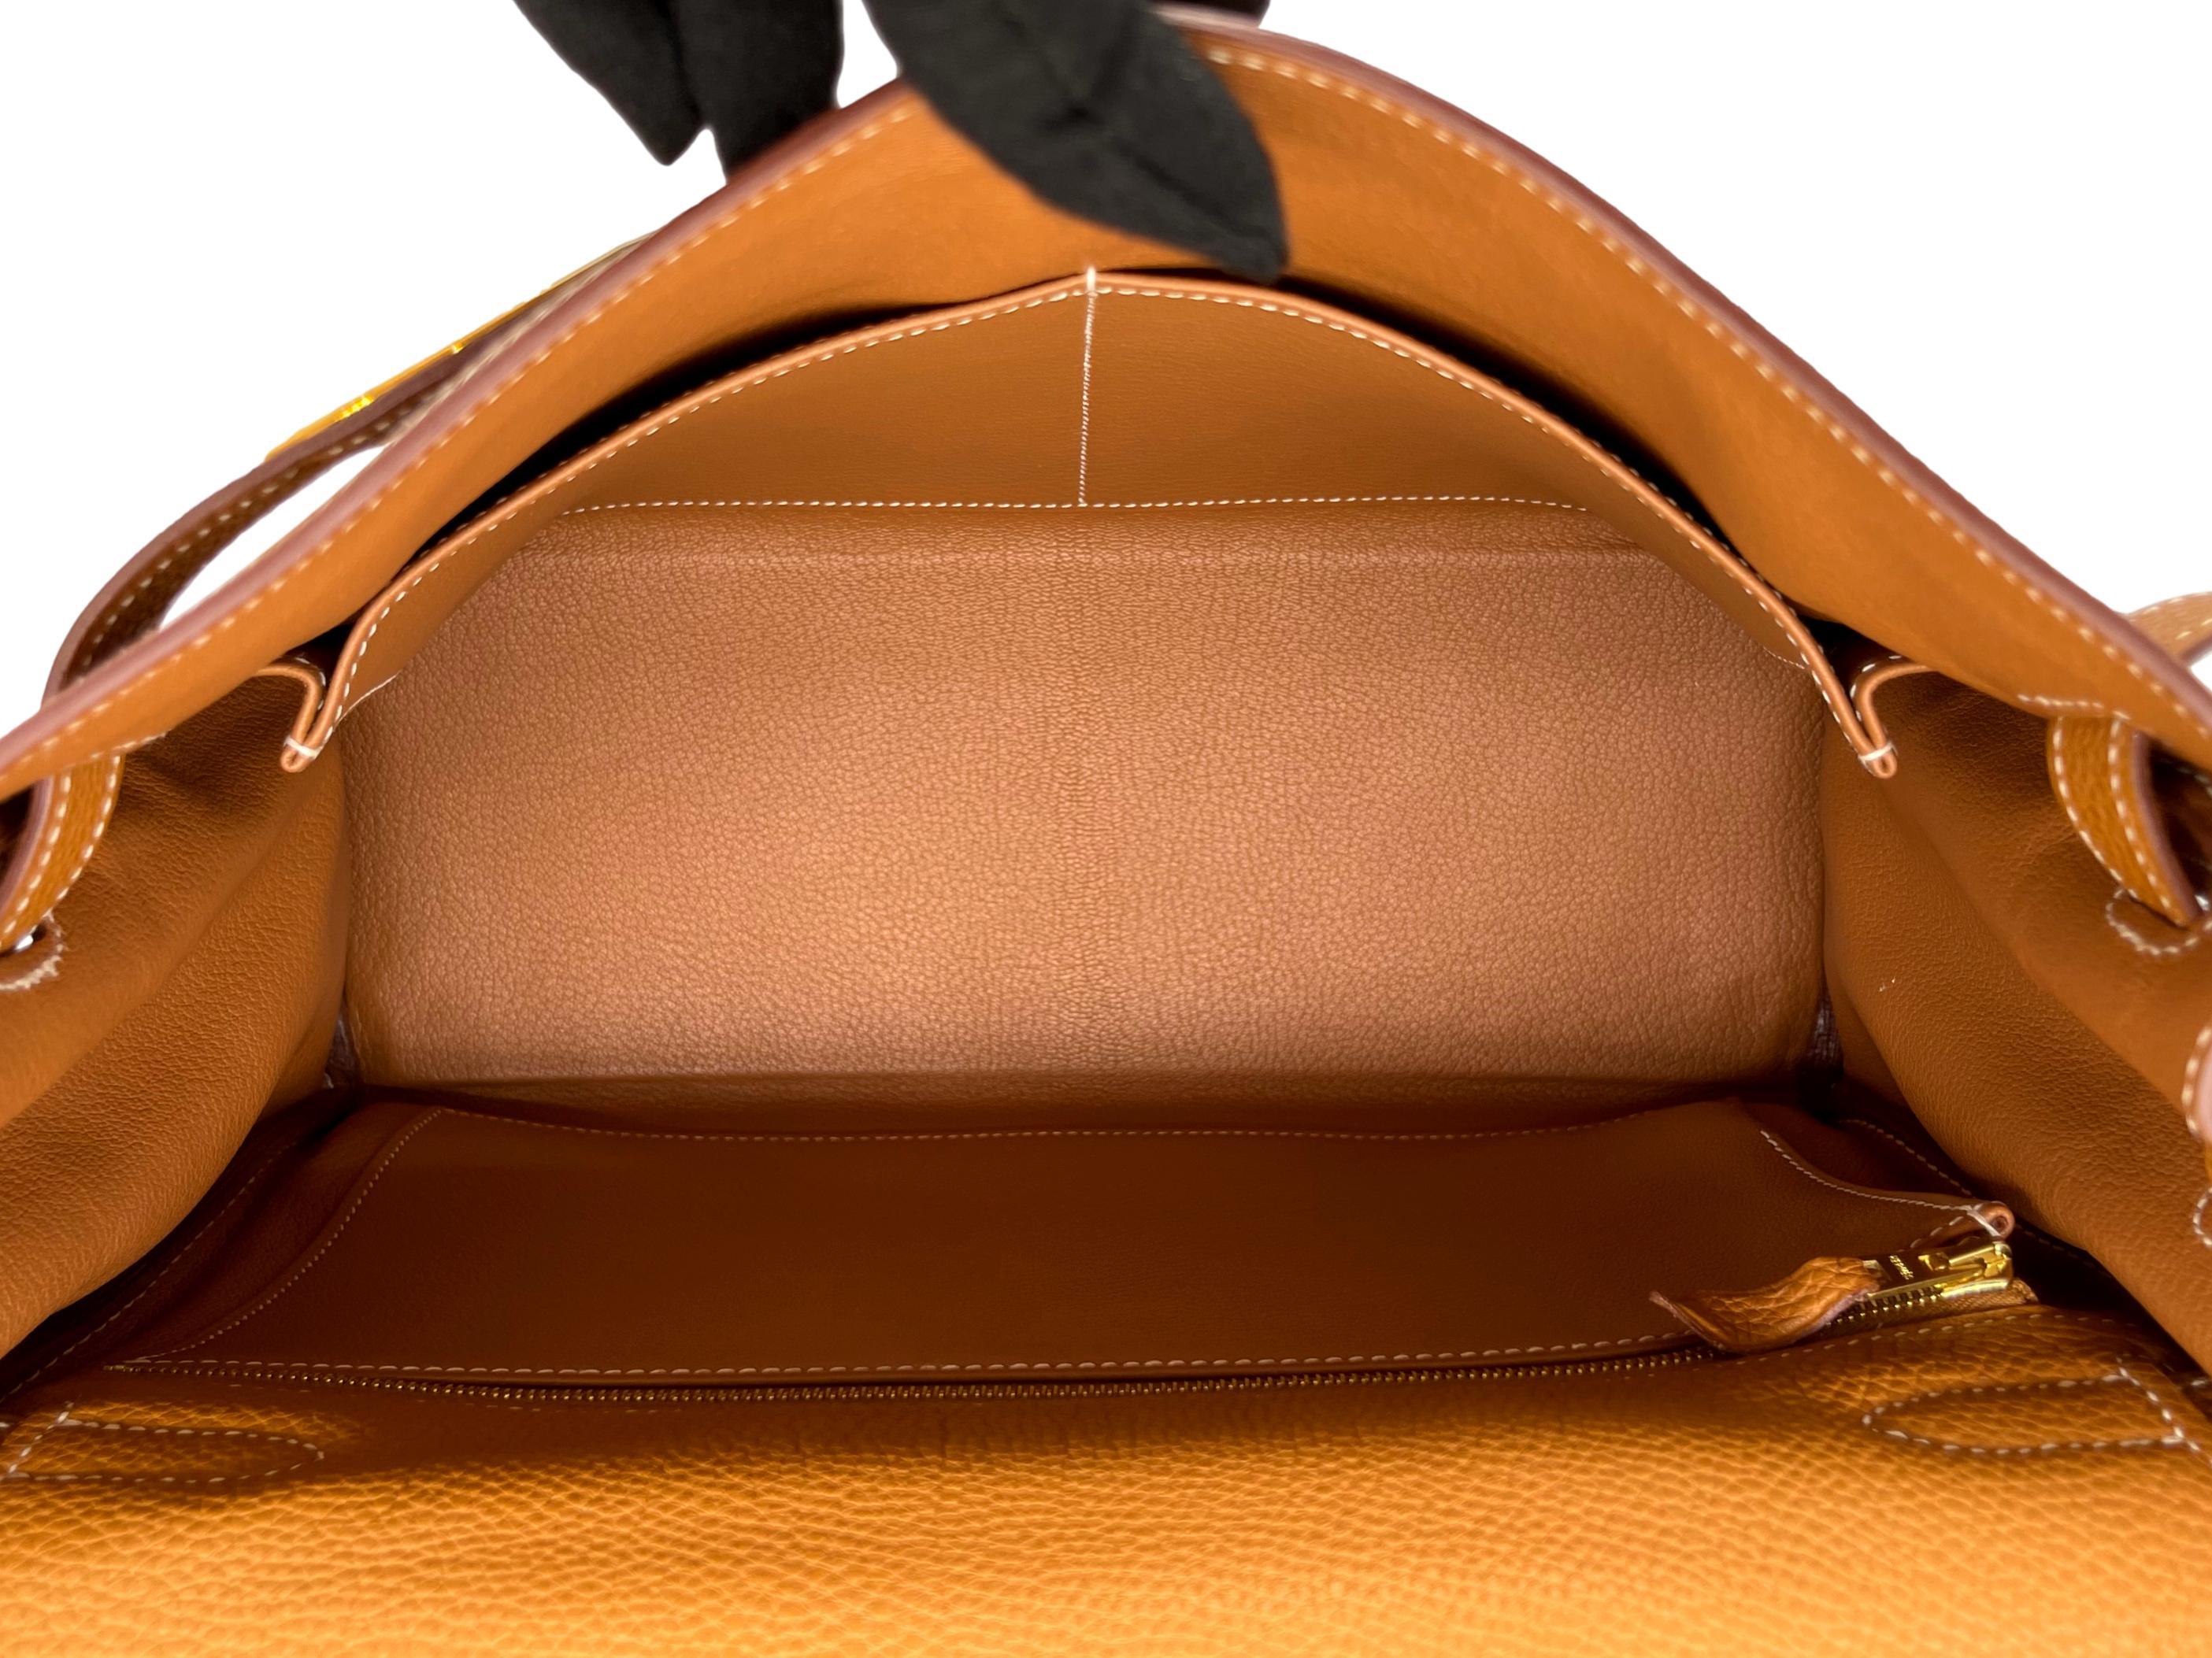 Hermès Natural Clemence Retourne Kelly Handbag with Gold Hardware 32cm, 2007. 13